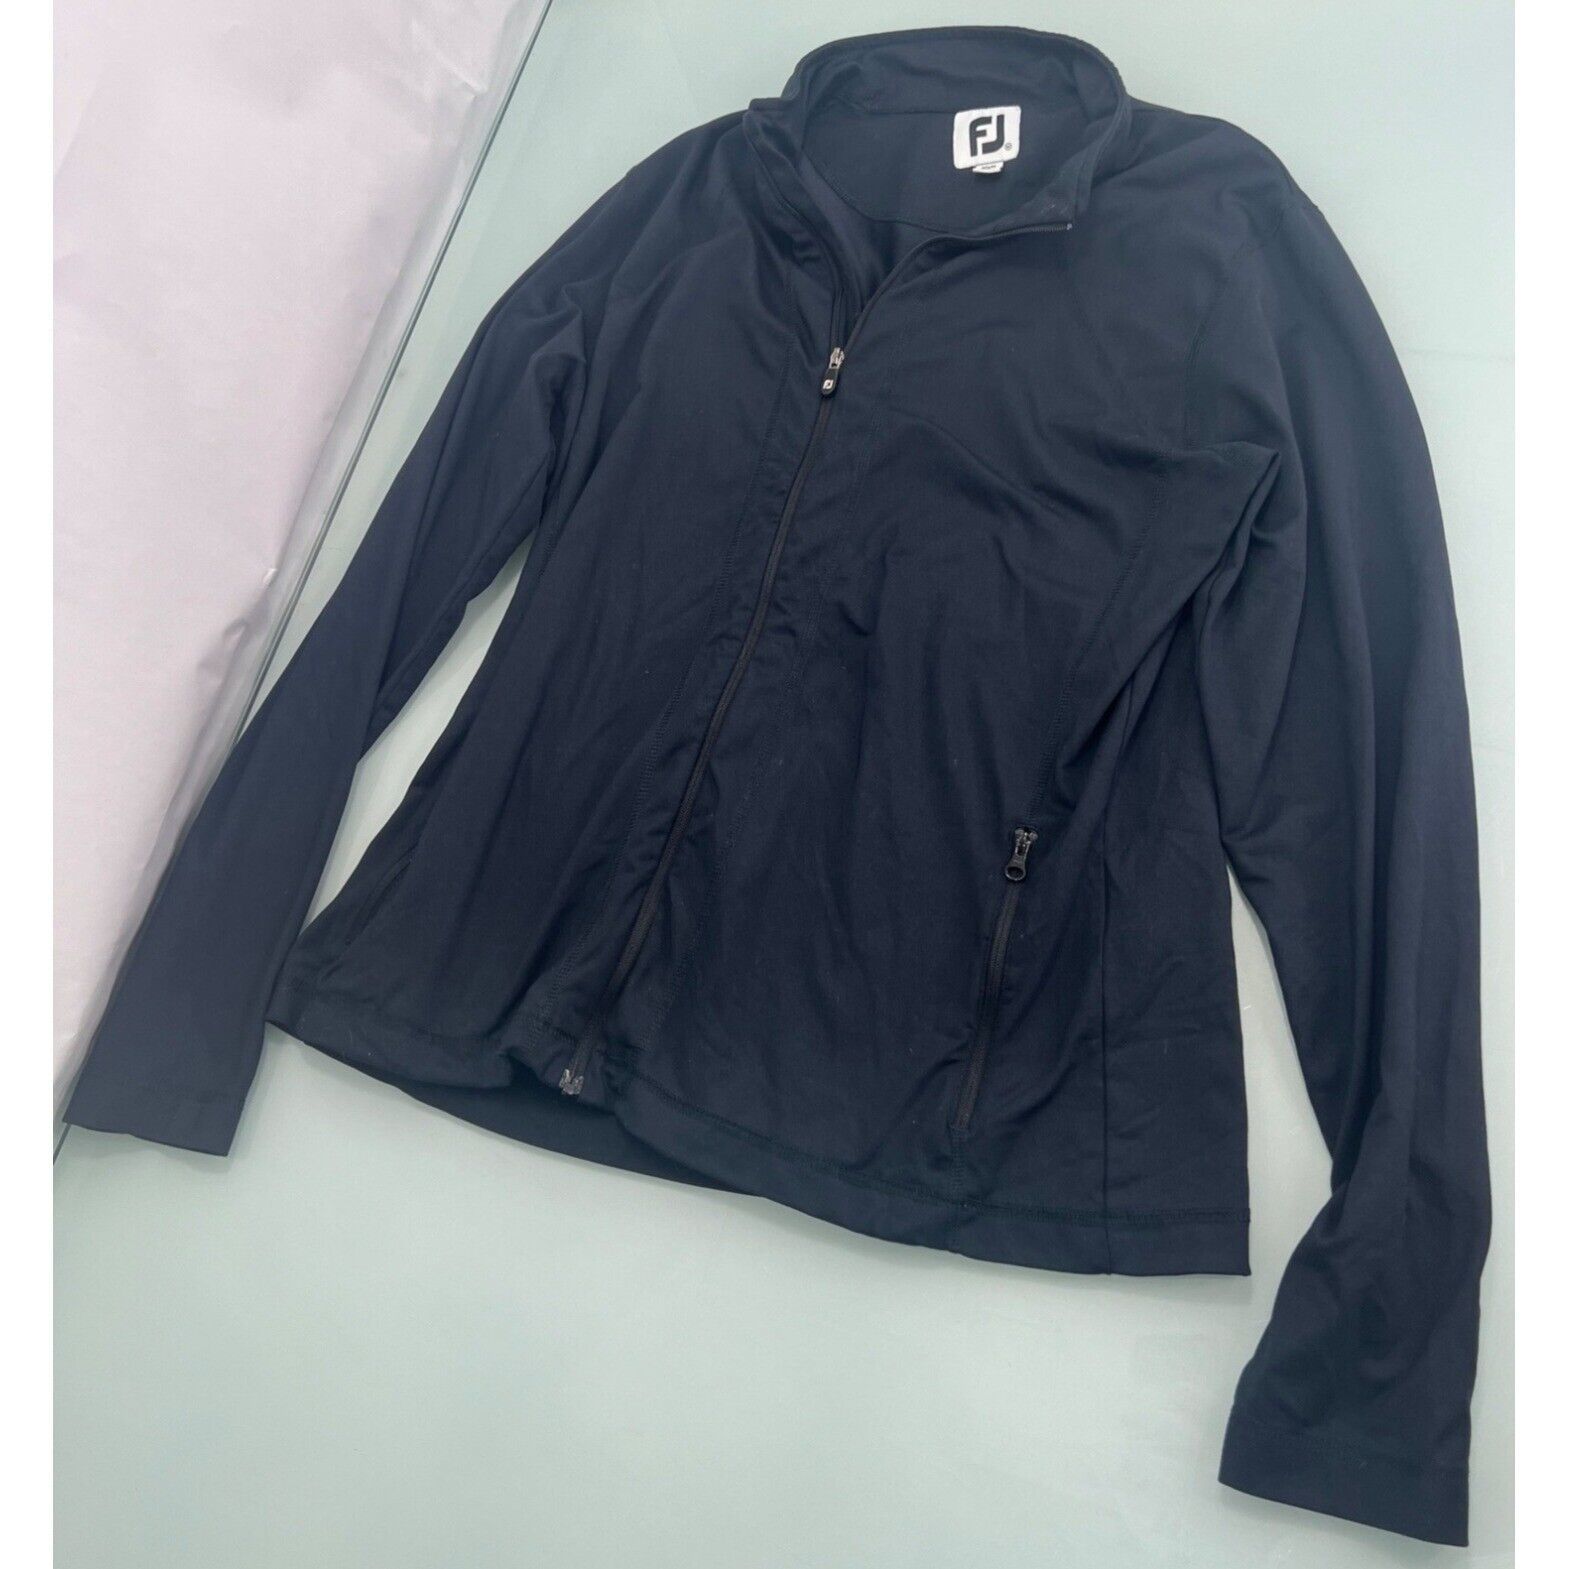 Primary image for Footjoy Women's Golf Jacket FJ Full Zip Nylon Spandex Black Mock Neck Medium M